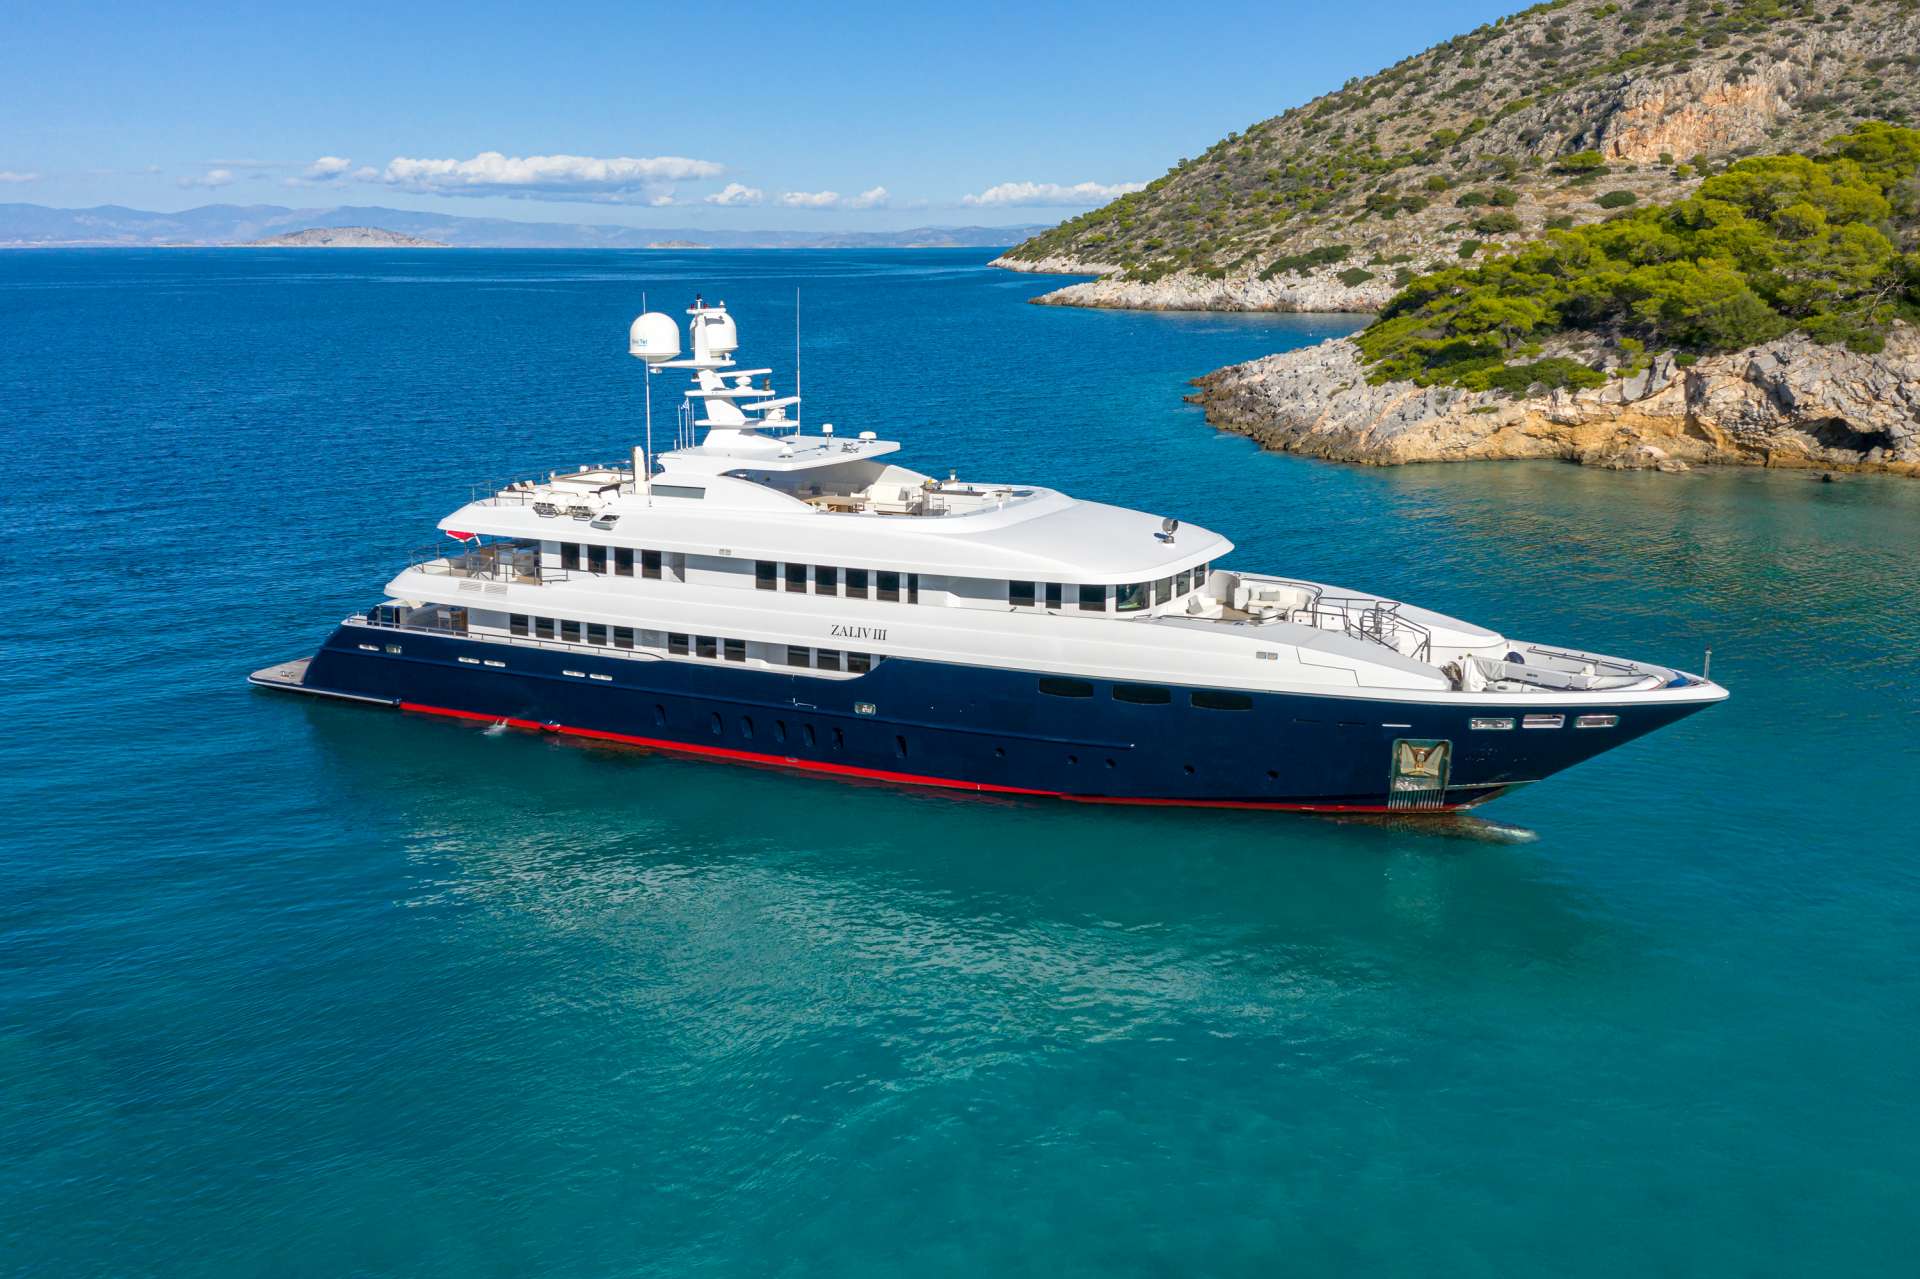 zaliv iii - Yacht Charter Radovici & Boat hire in East Mediterranean 1